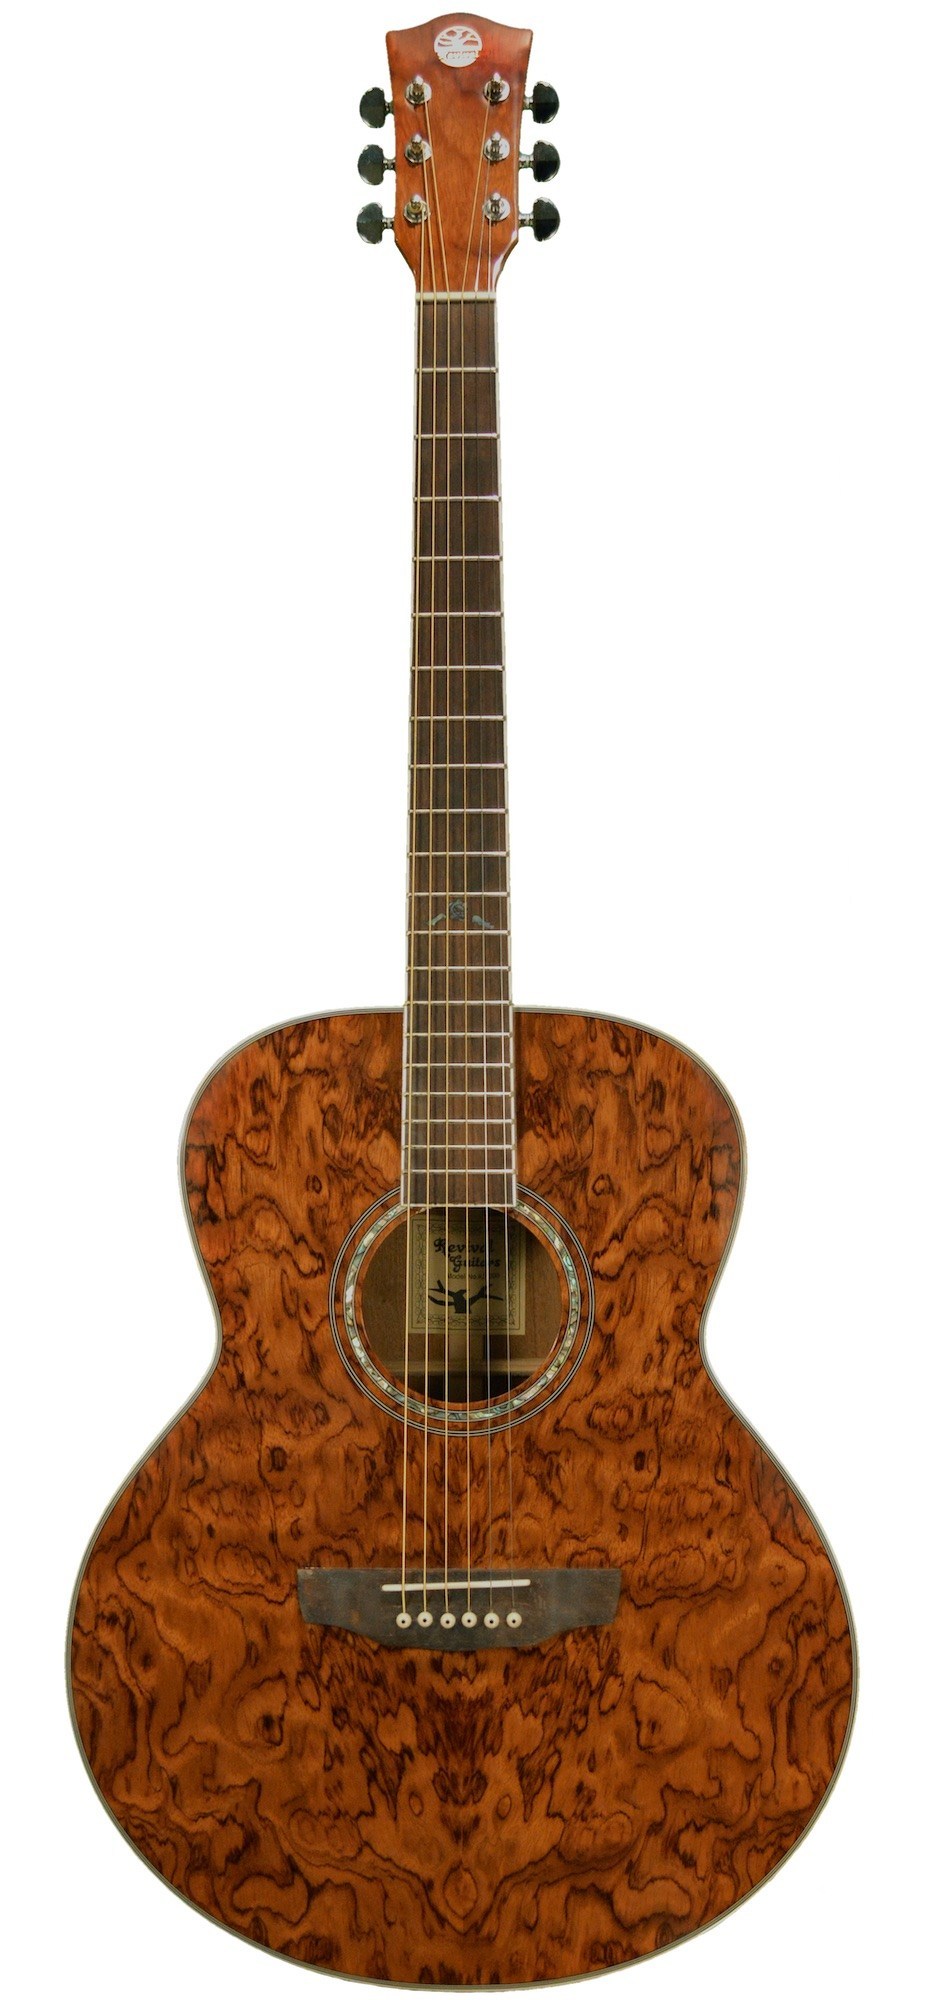 Revival RJ-200 Bubinga Jumbo Acoustic Guitar